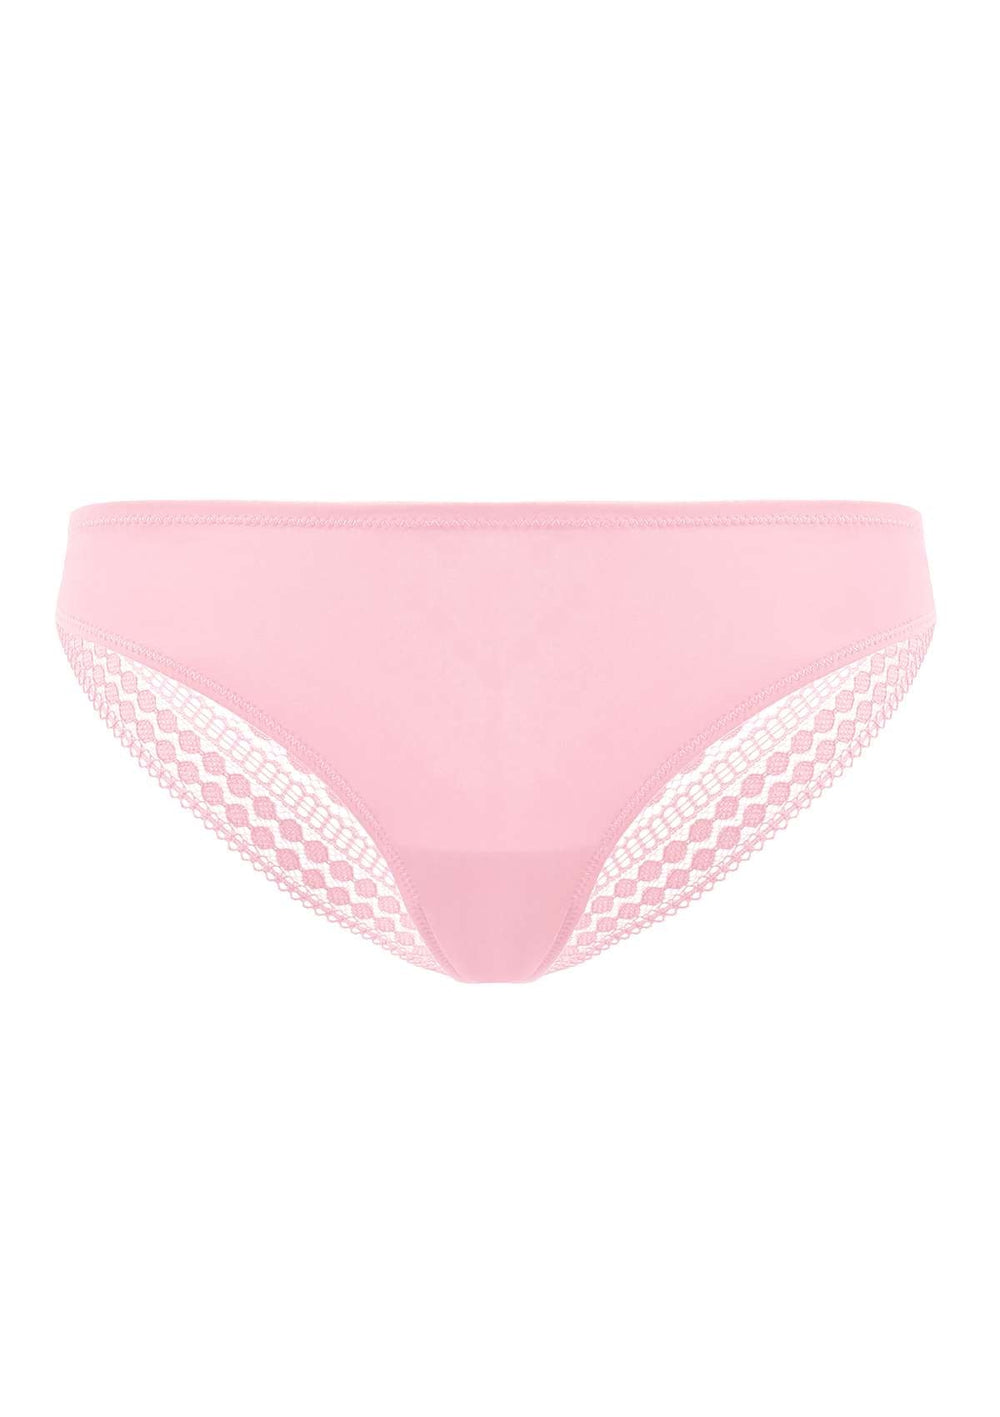 HSIA Polka Dot Super Soft Pink Lace Back Cheeky Underwear